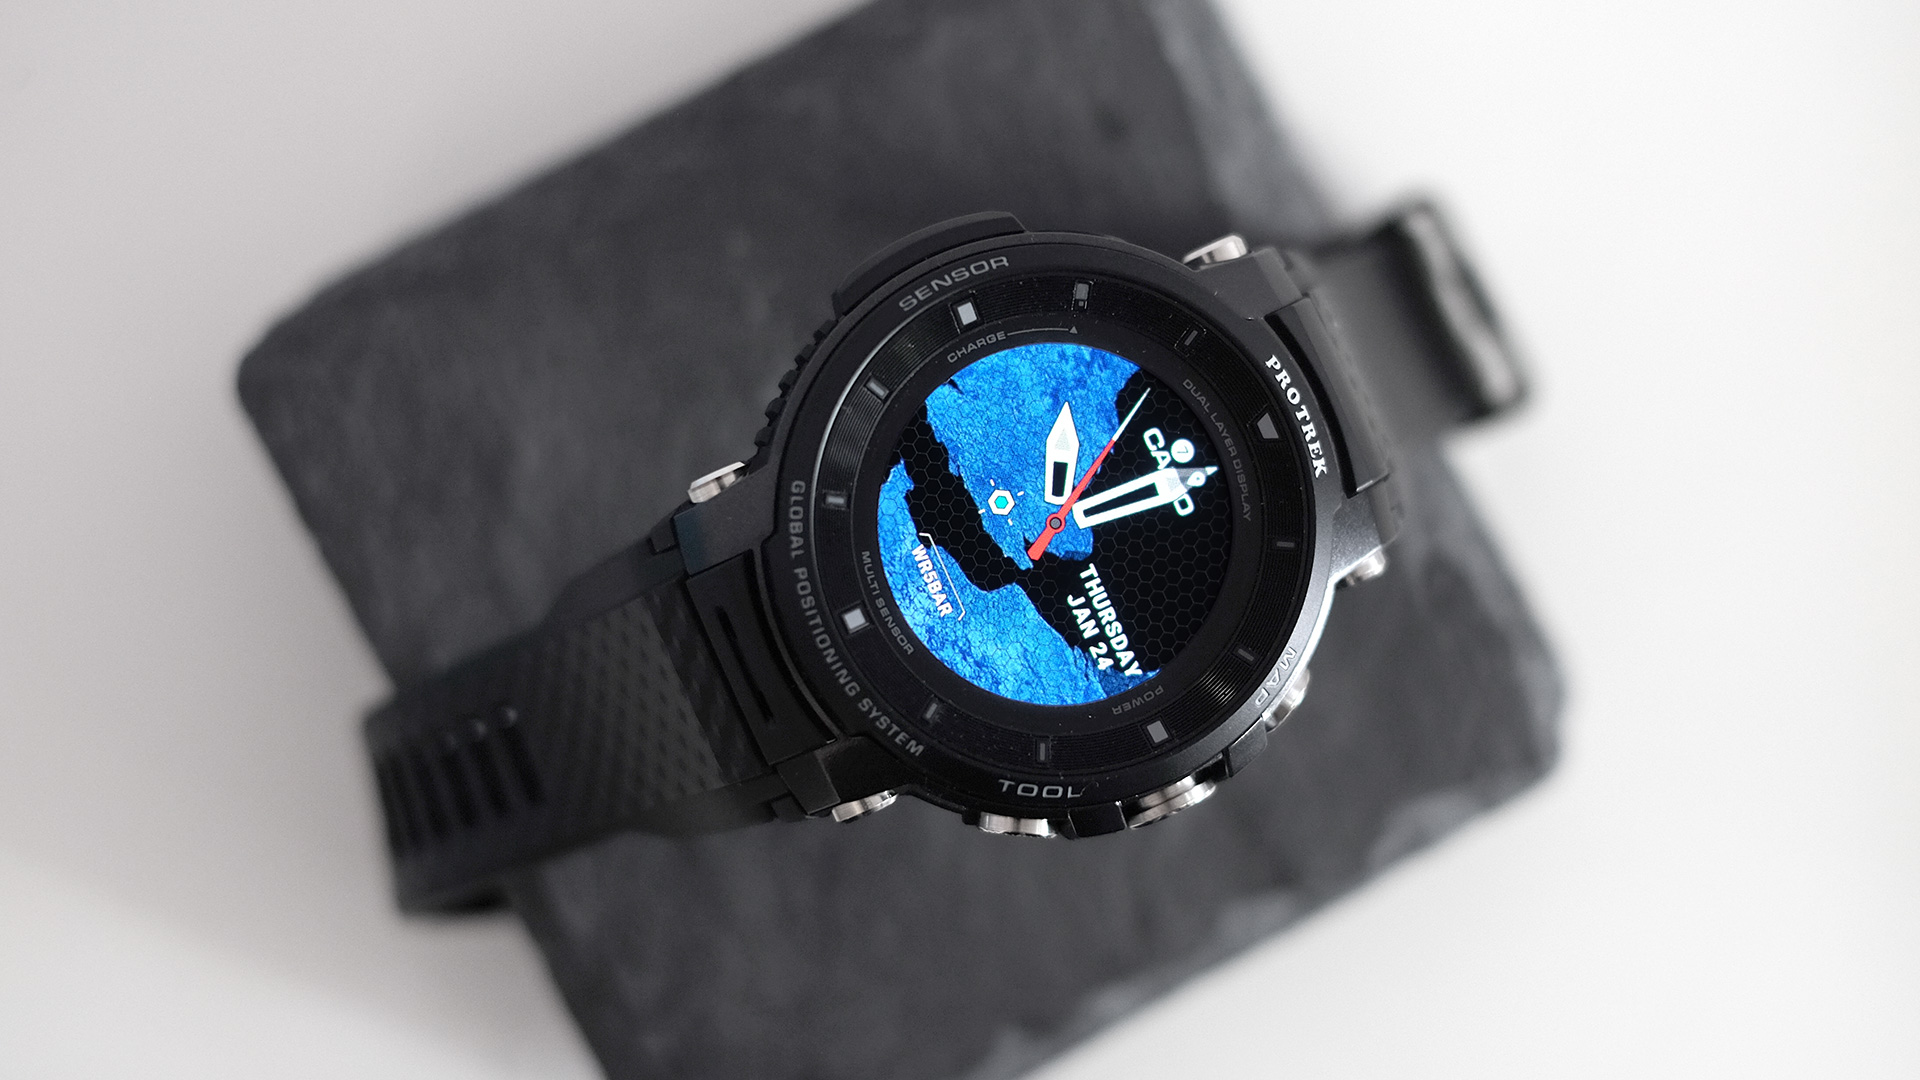 Casio protrek smartwatch